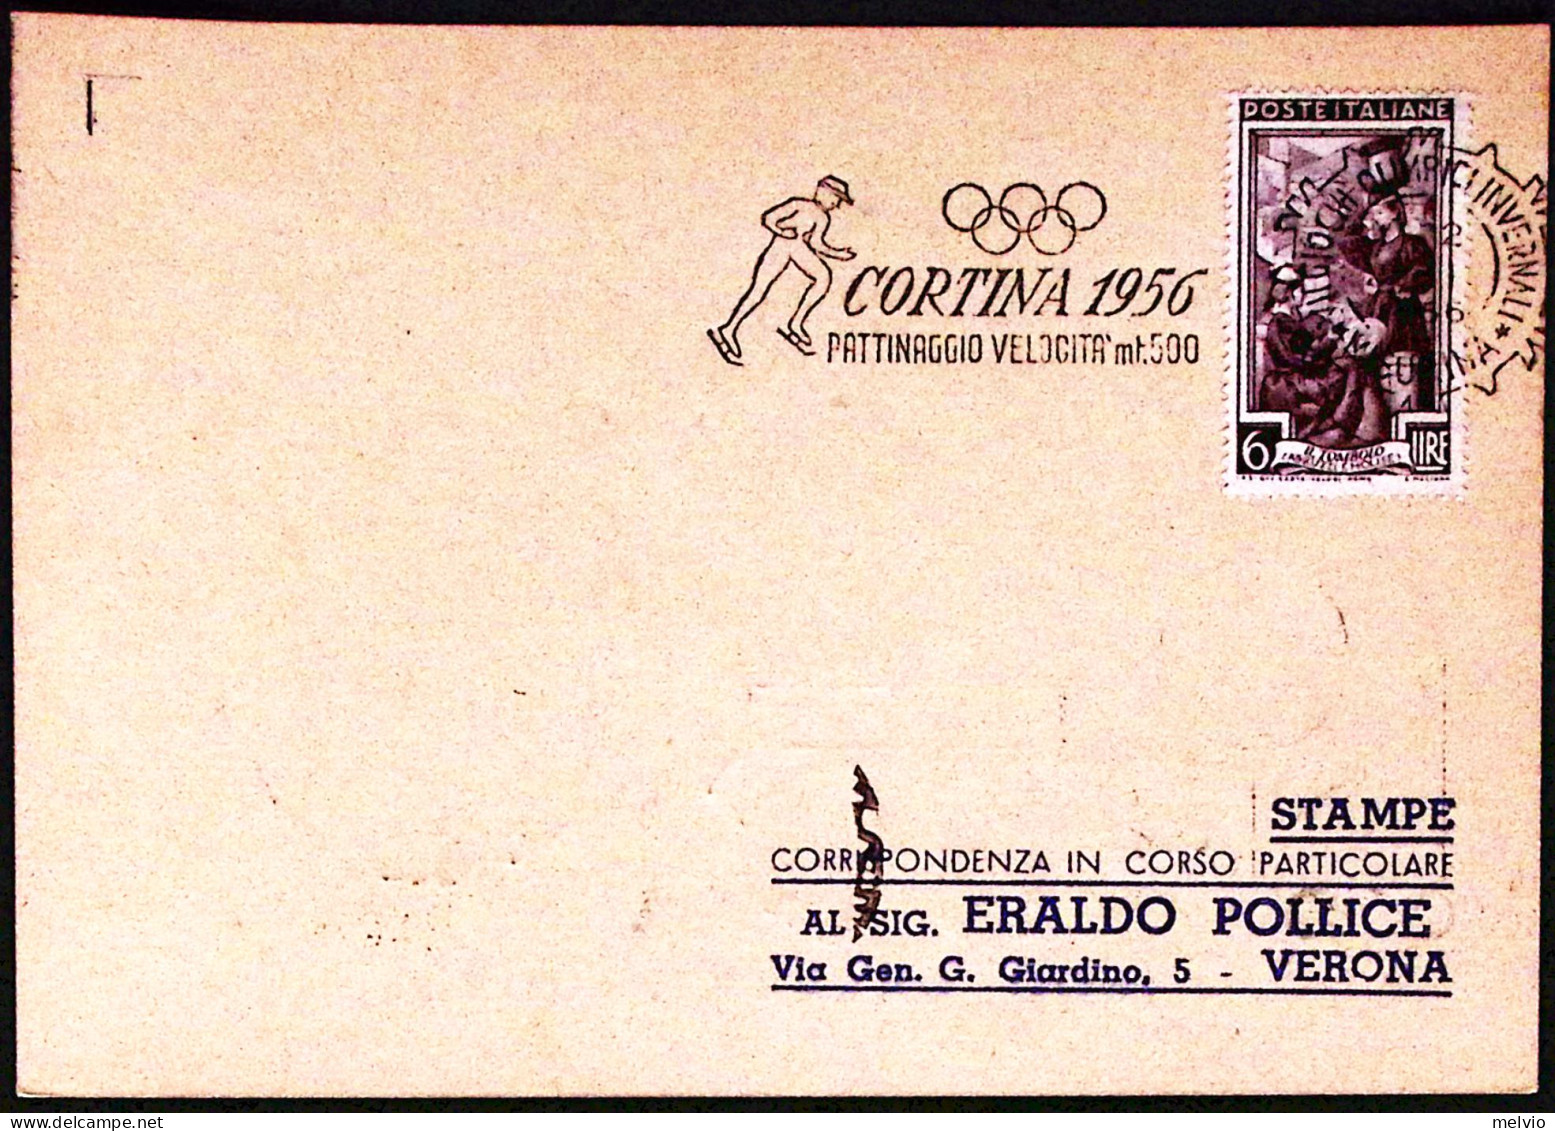 1956-MISURINA PATTINAGGIO VELOCITA' Mt 500 Annullo Targhetta (28.1) Su Cartolina - Manifestations